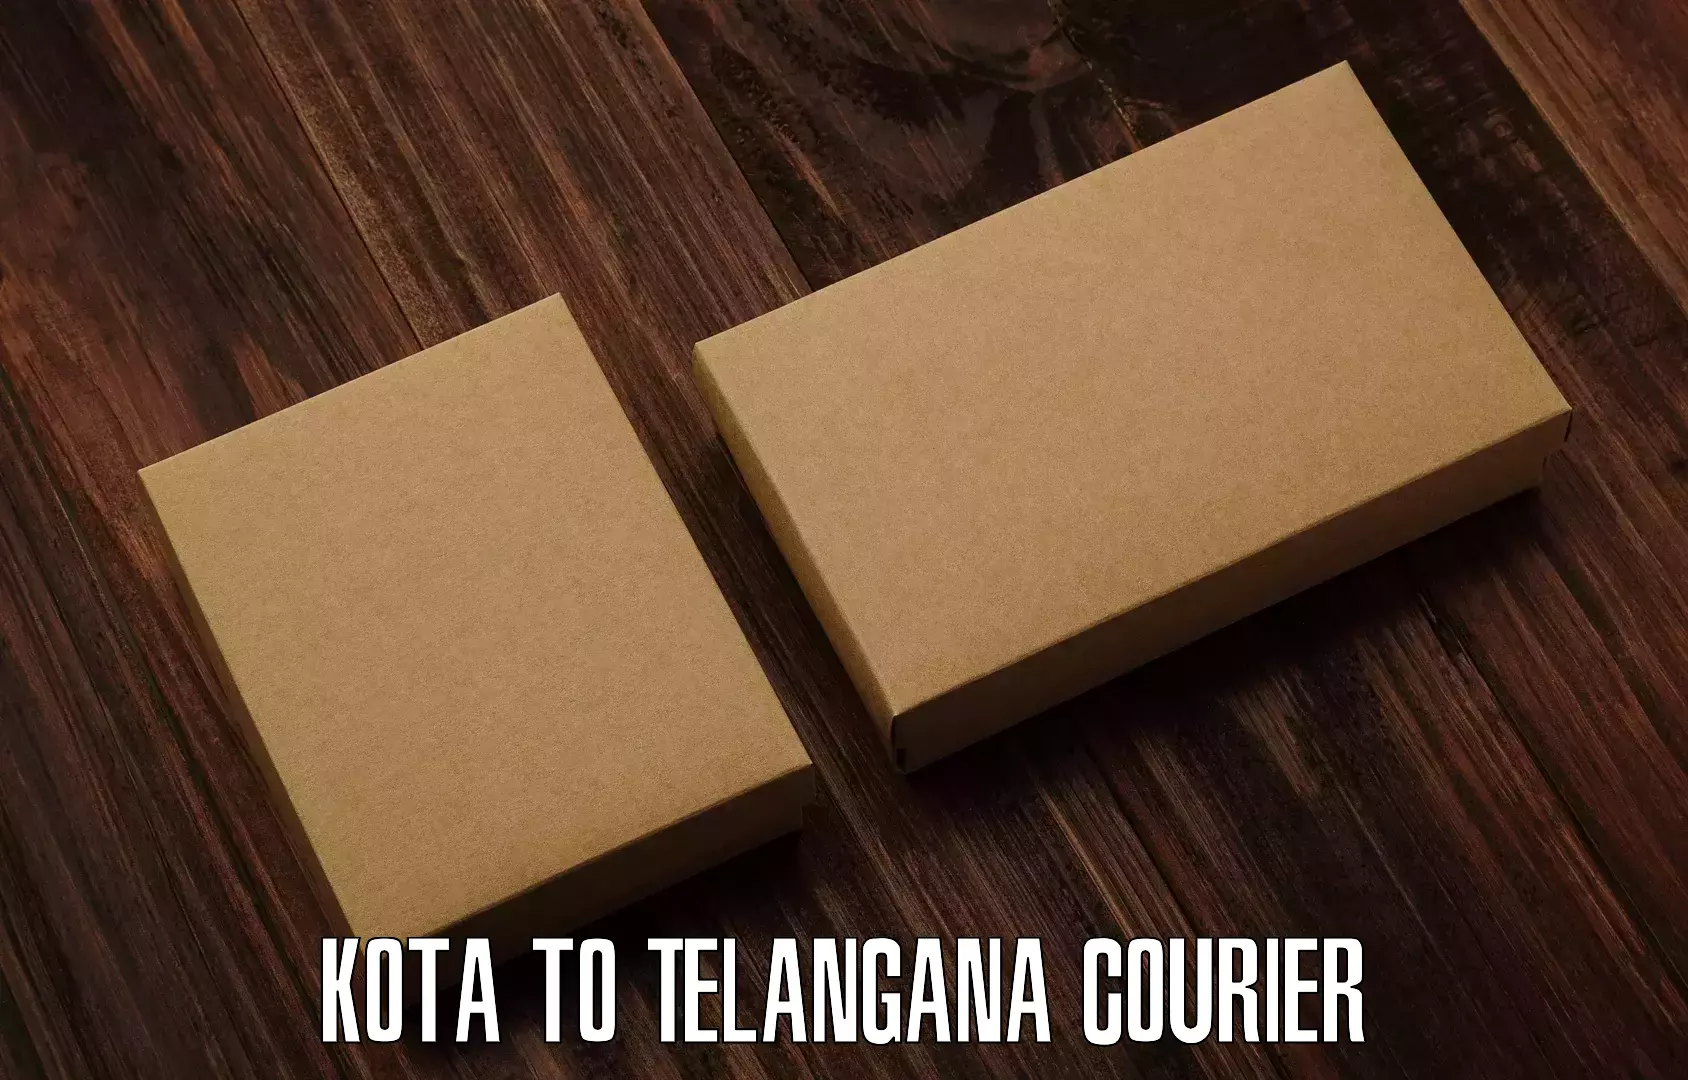 Courier service comparison Kota to Zahirabad